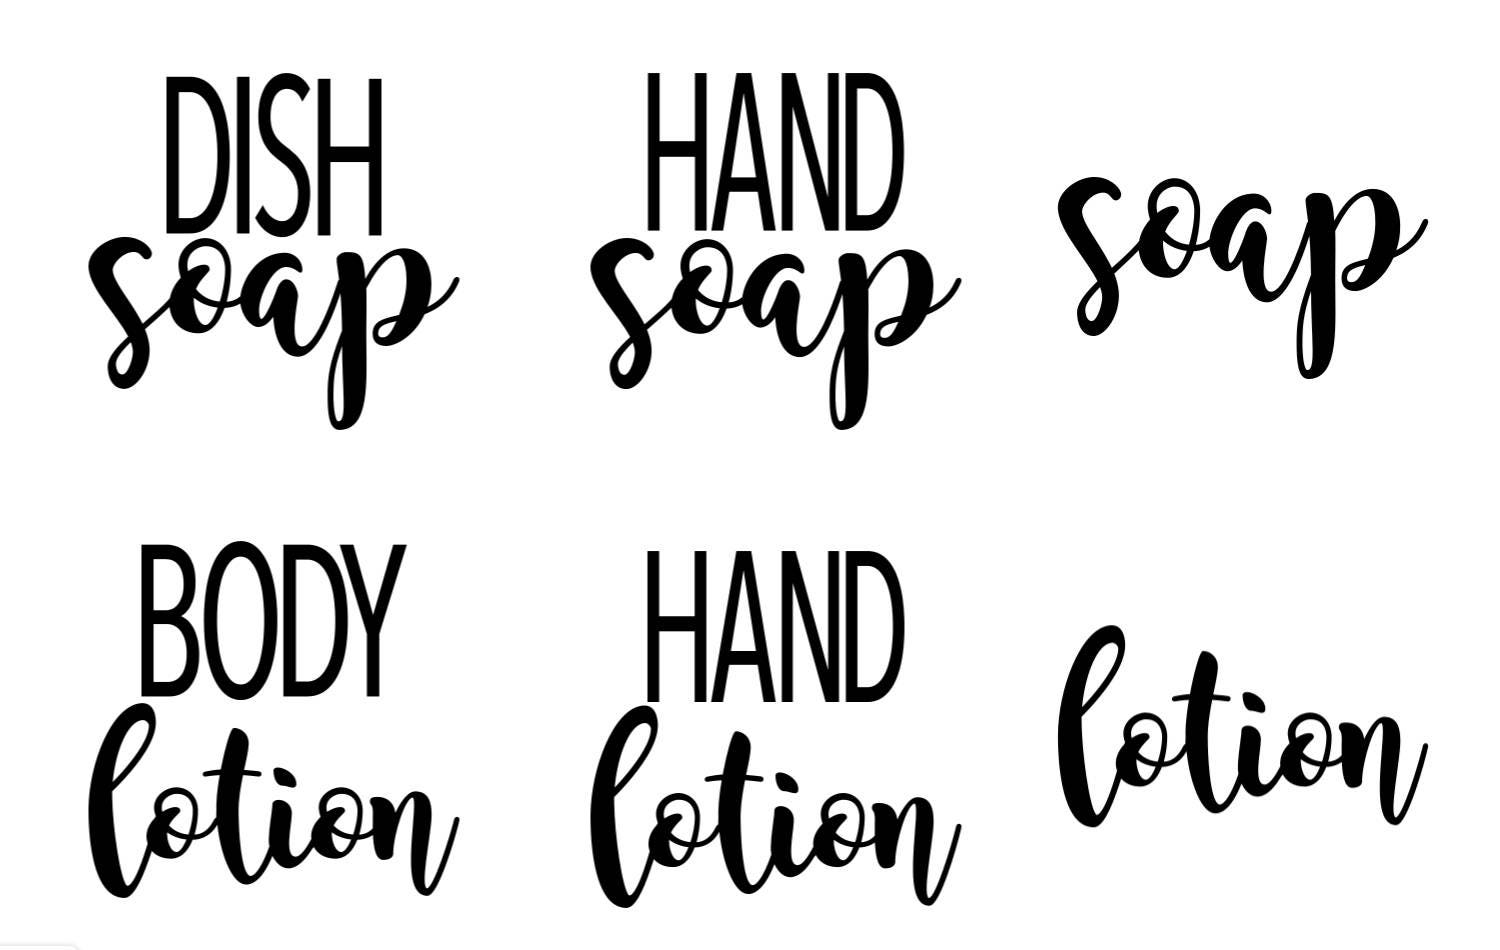 Hand Soap Label, Dish Soap Label, Essential Oil Labels, Body Lotion